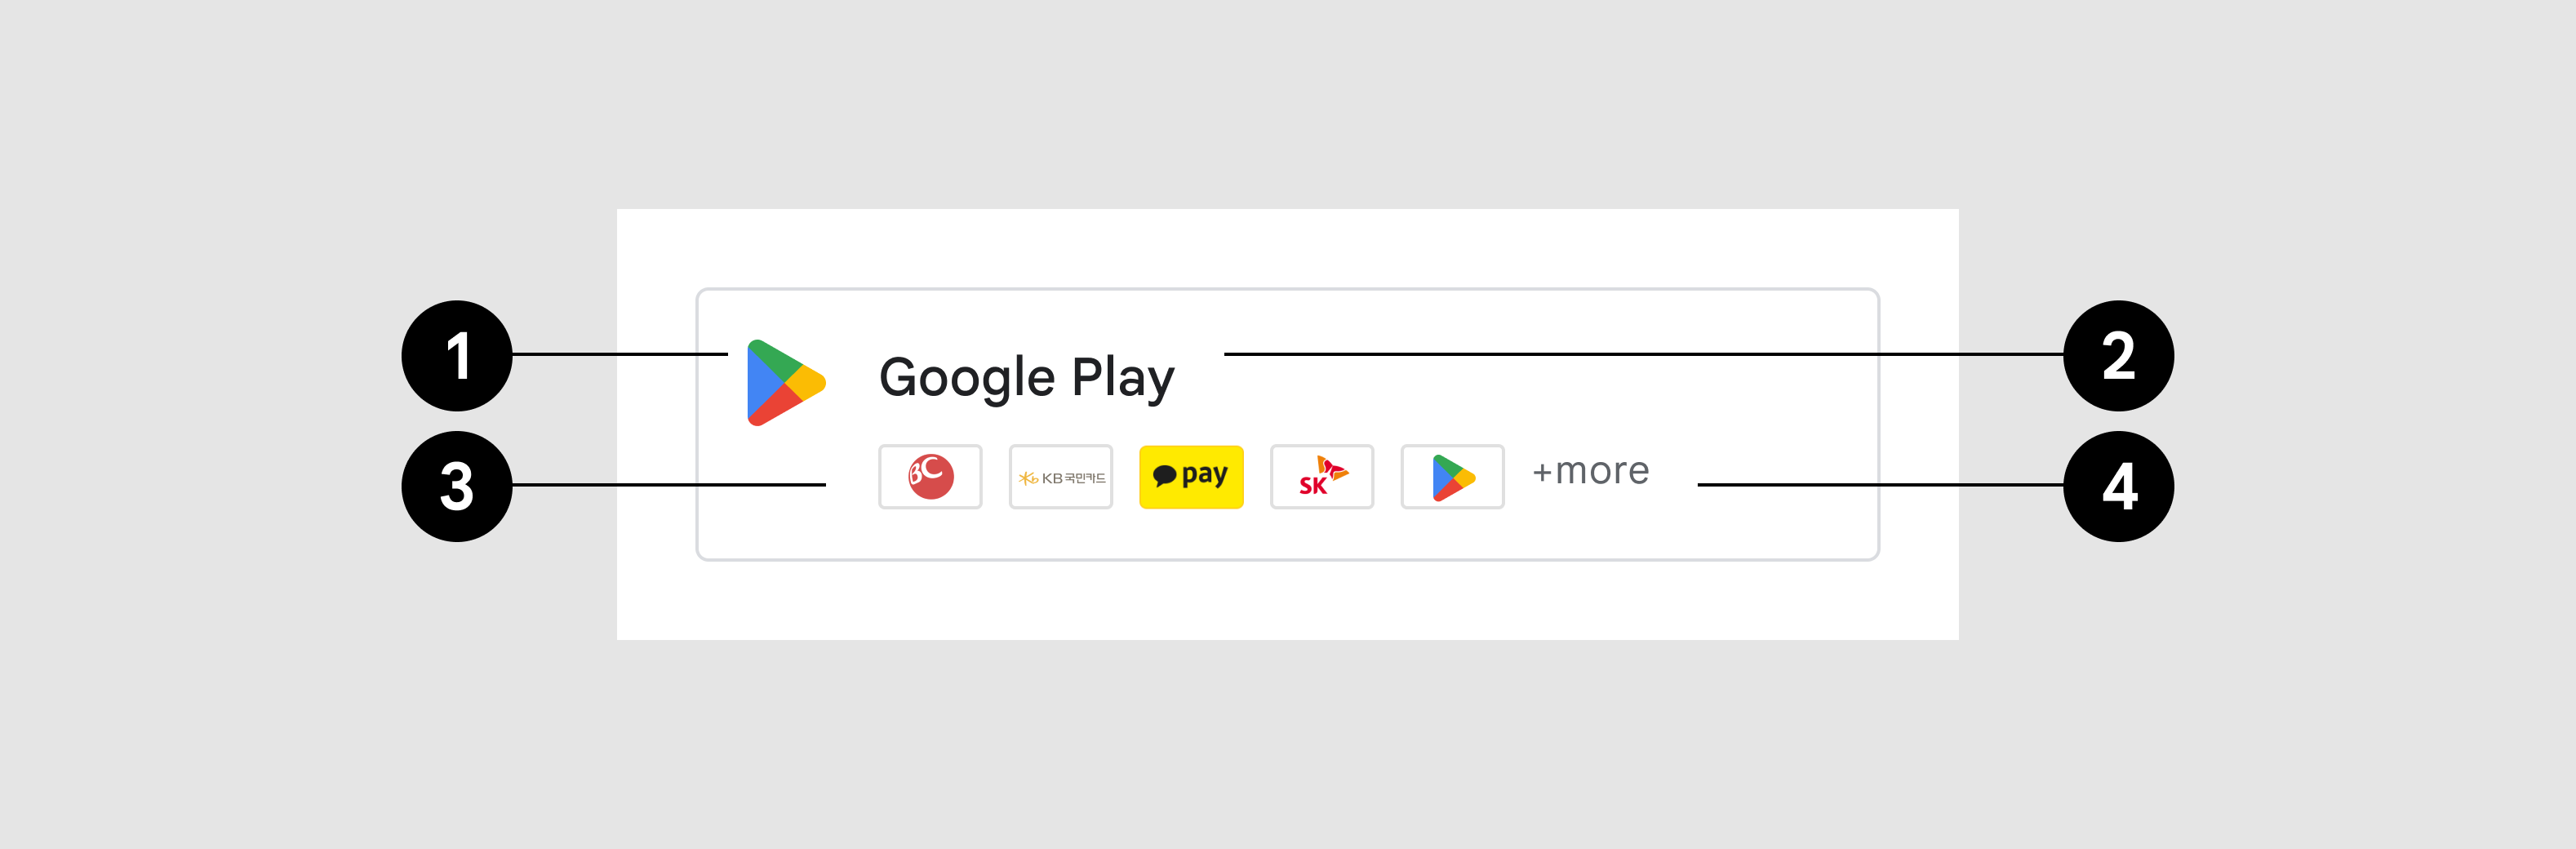 Google Play 按鈕